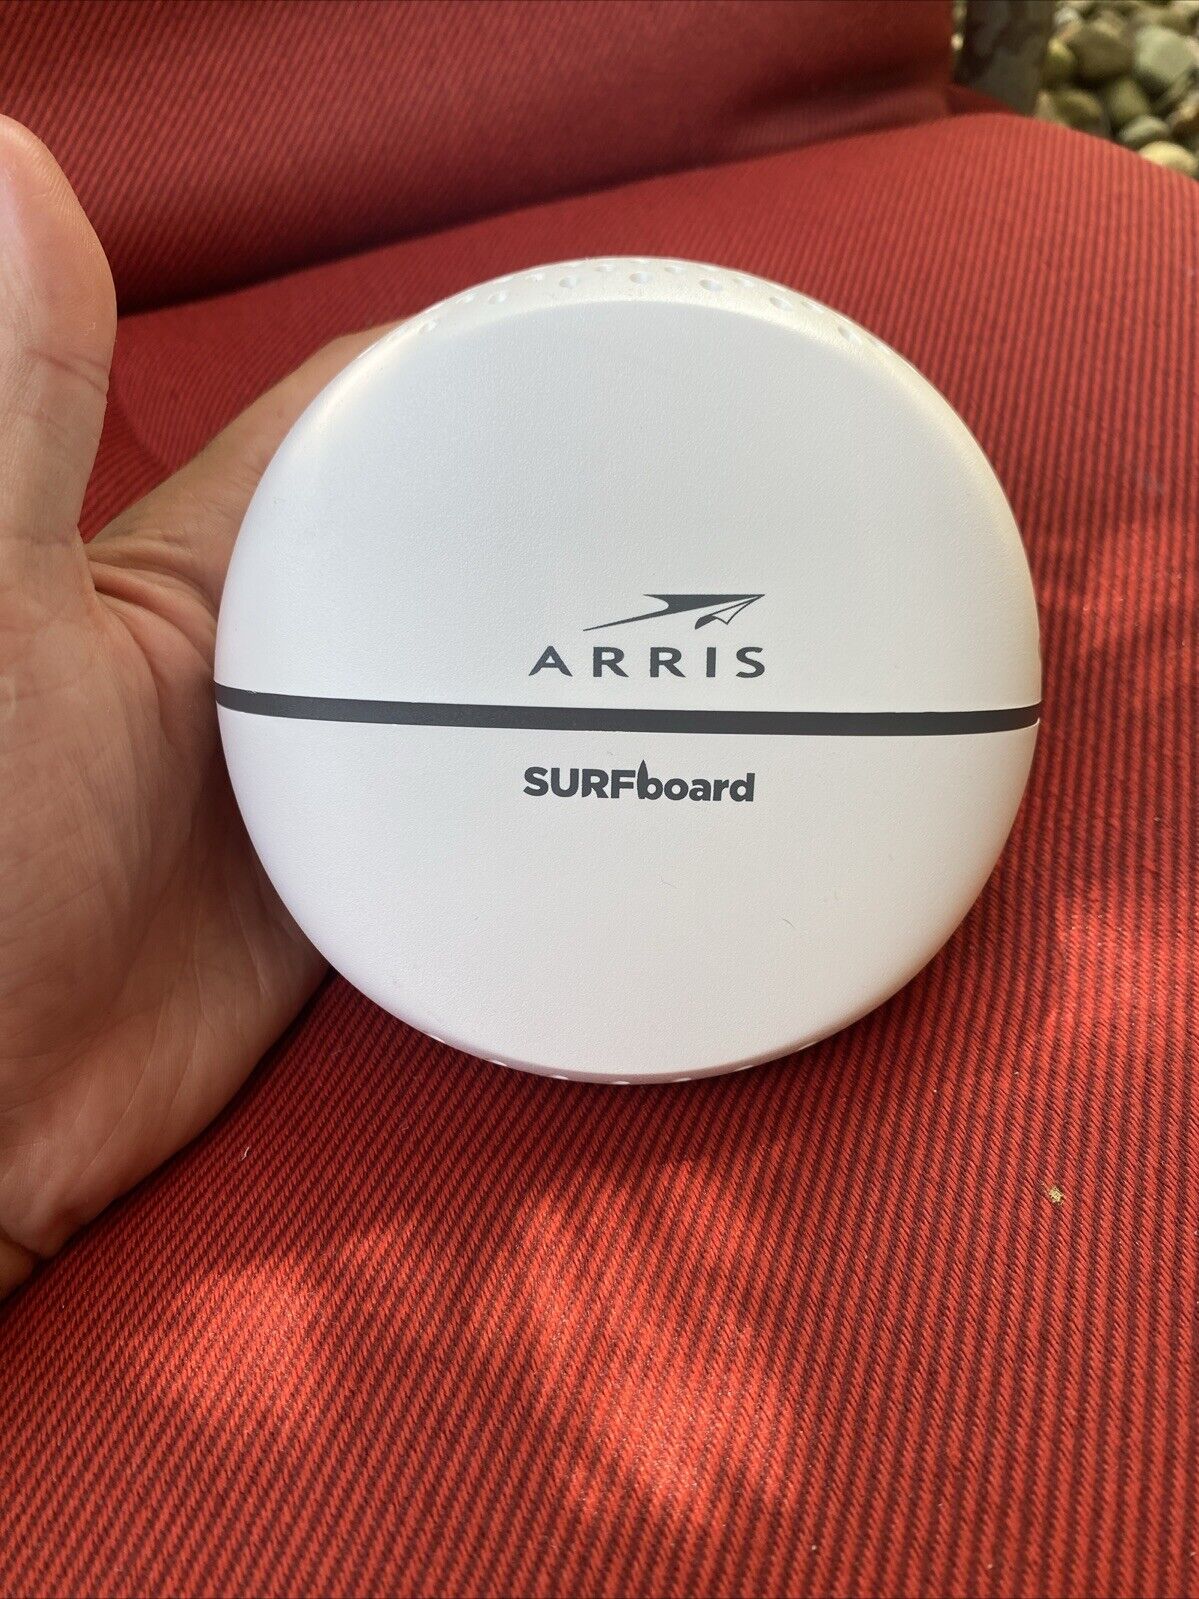 ARRIS SURFBOARD SBX-AC1200P WIFI HOTSPOT w/ RIPCURRENT Works Great Clean Mint